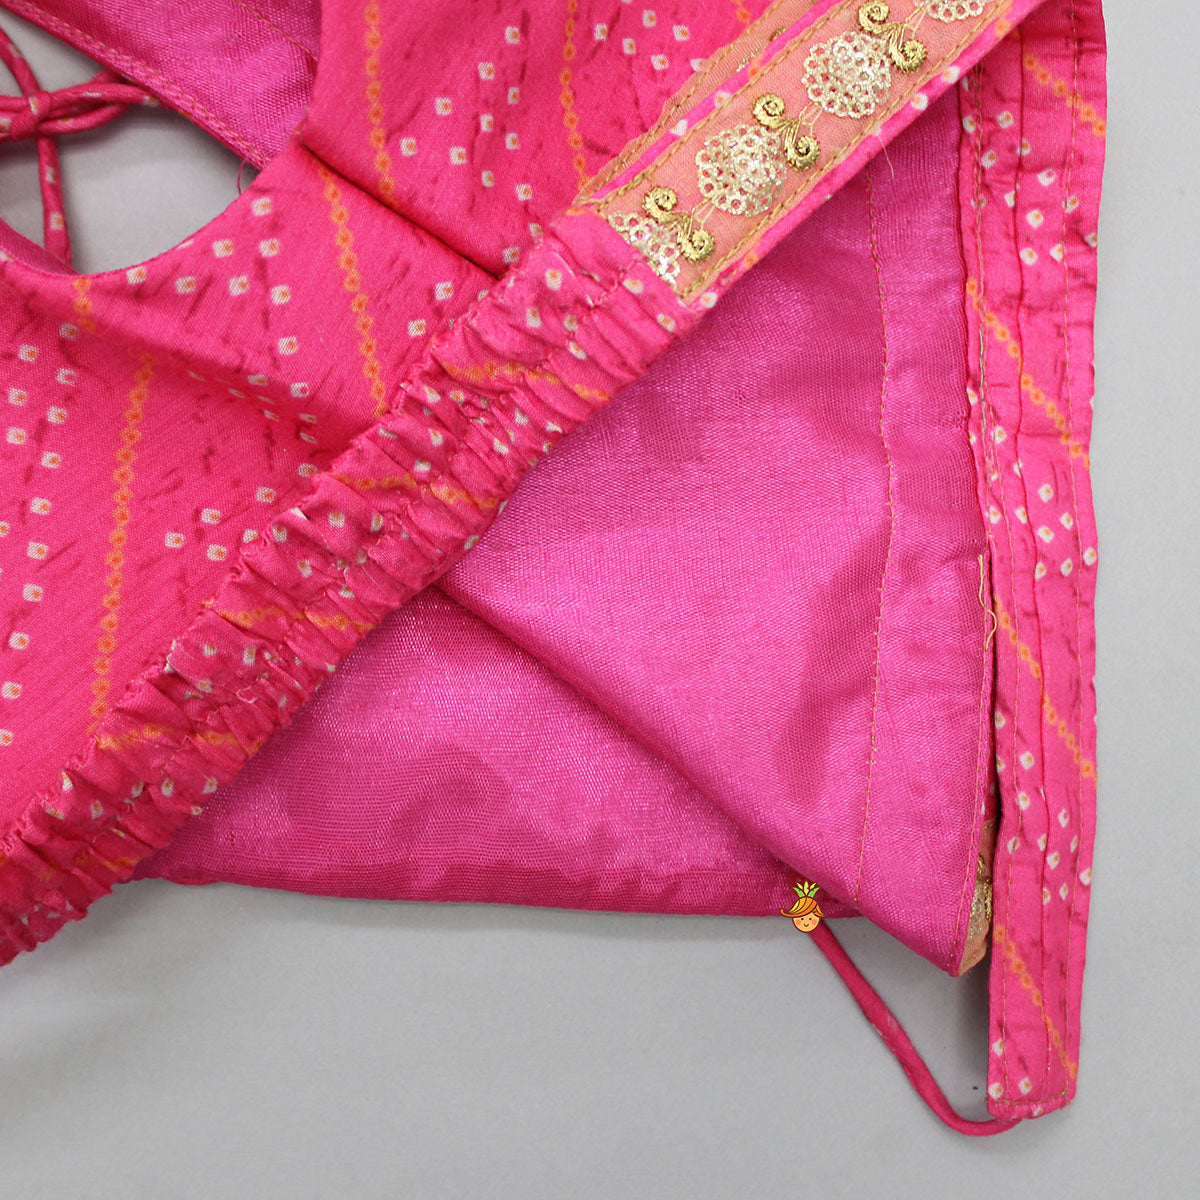 Elegant Pink Top And Fringes Tassels Detail Lehenga With Matching Dupatta